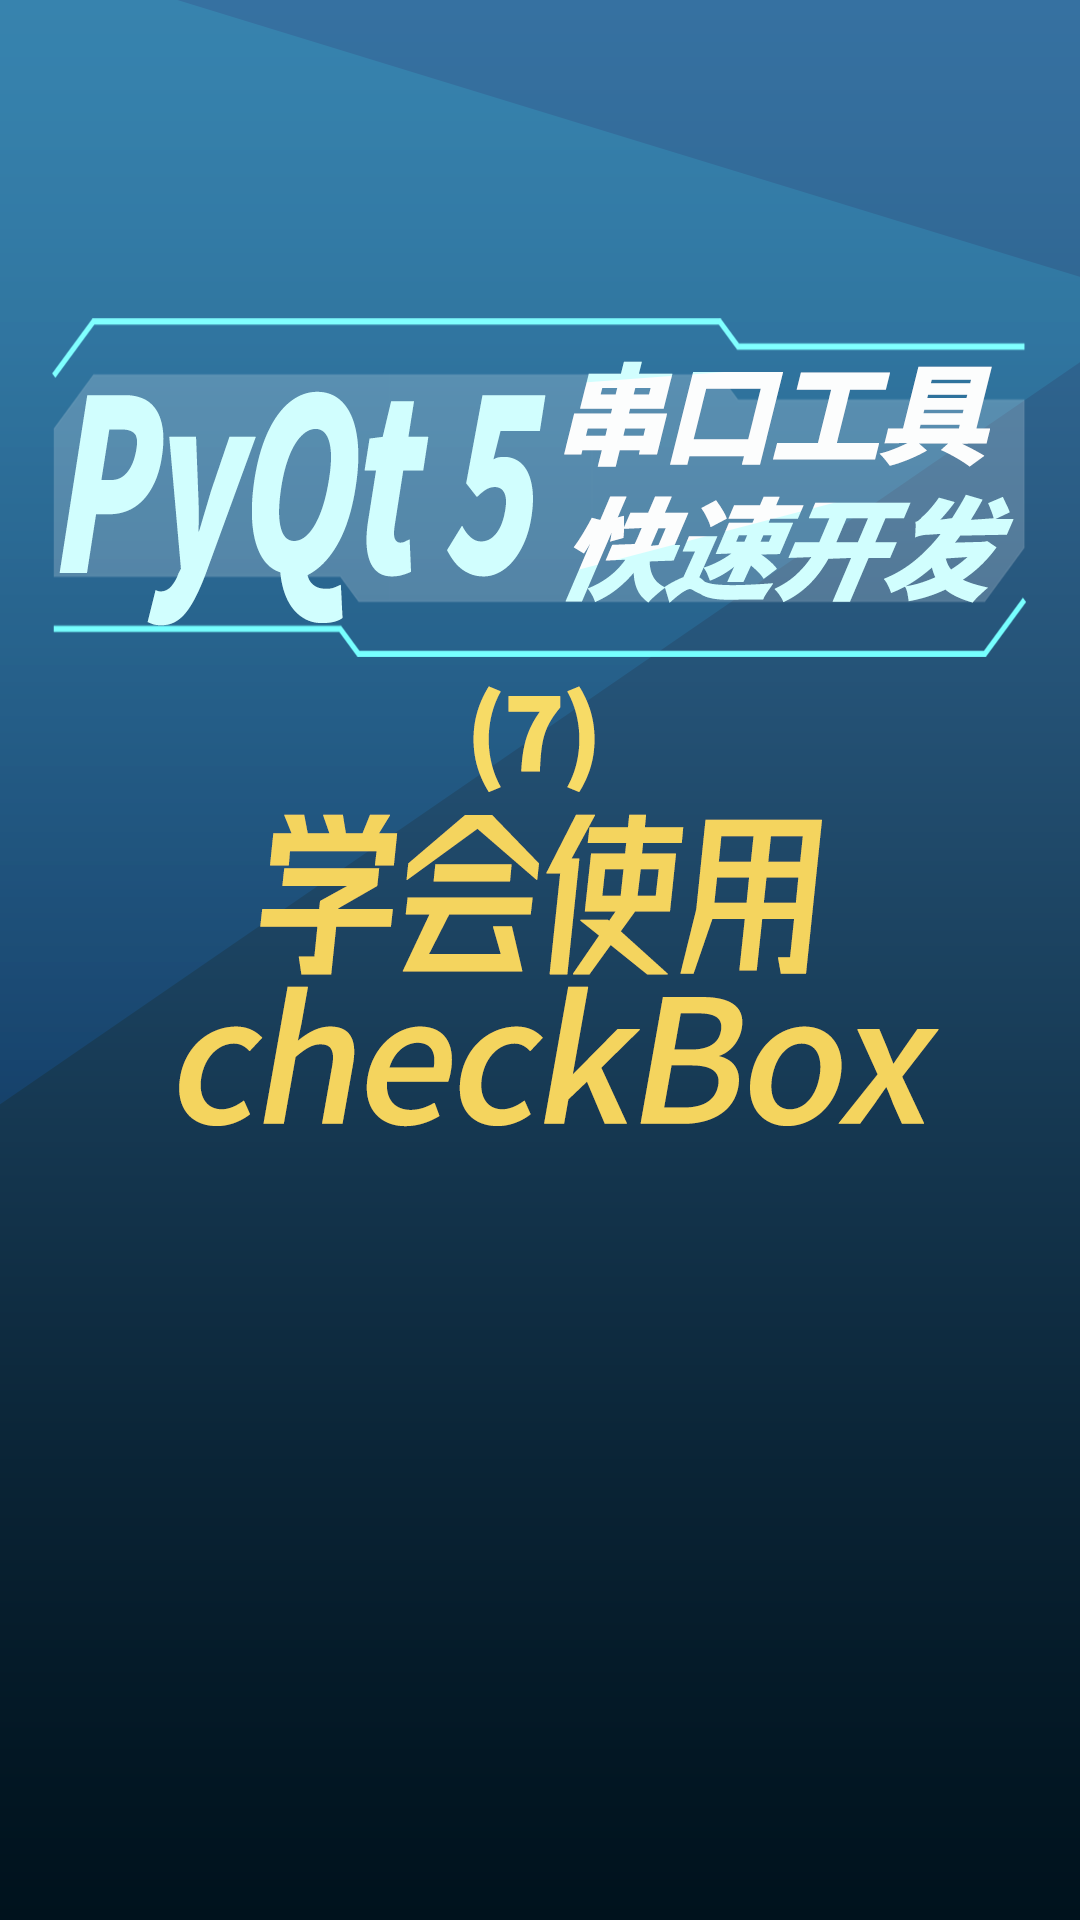 pyqt5串口工具快速开发7-学习使用#串口工具开发 